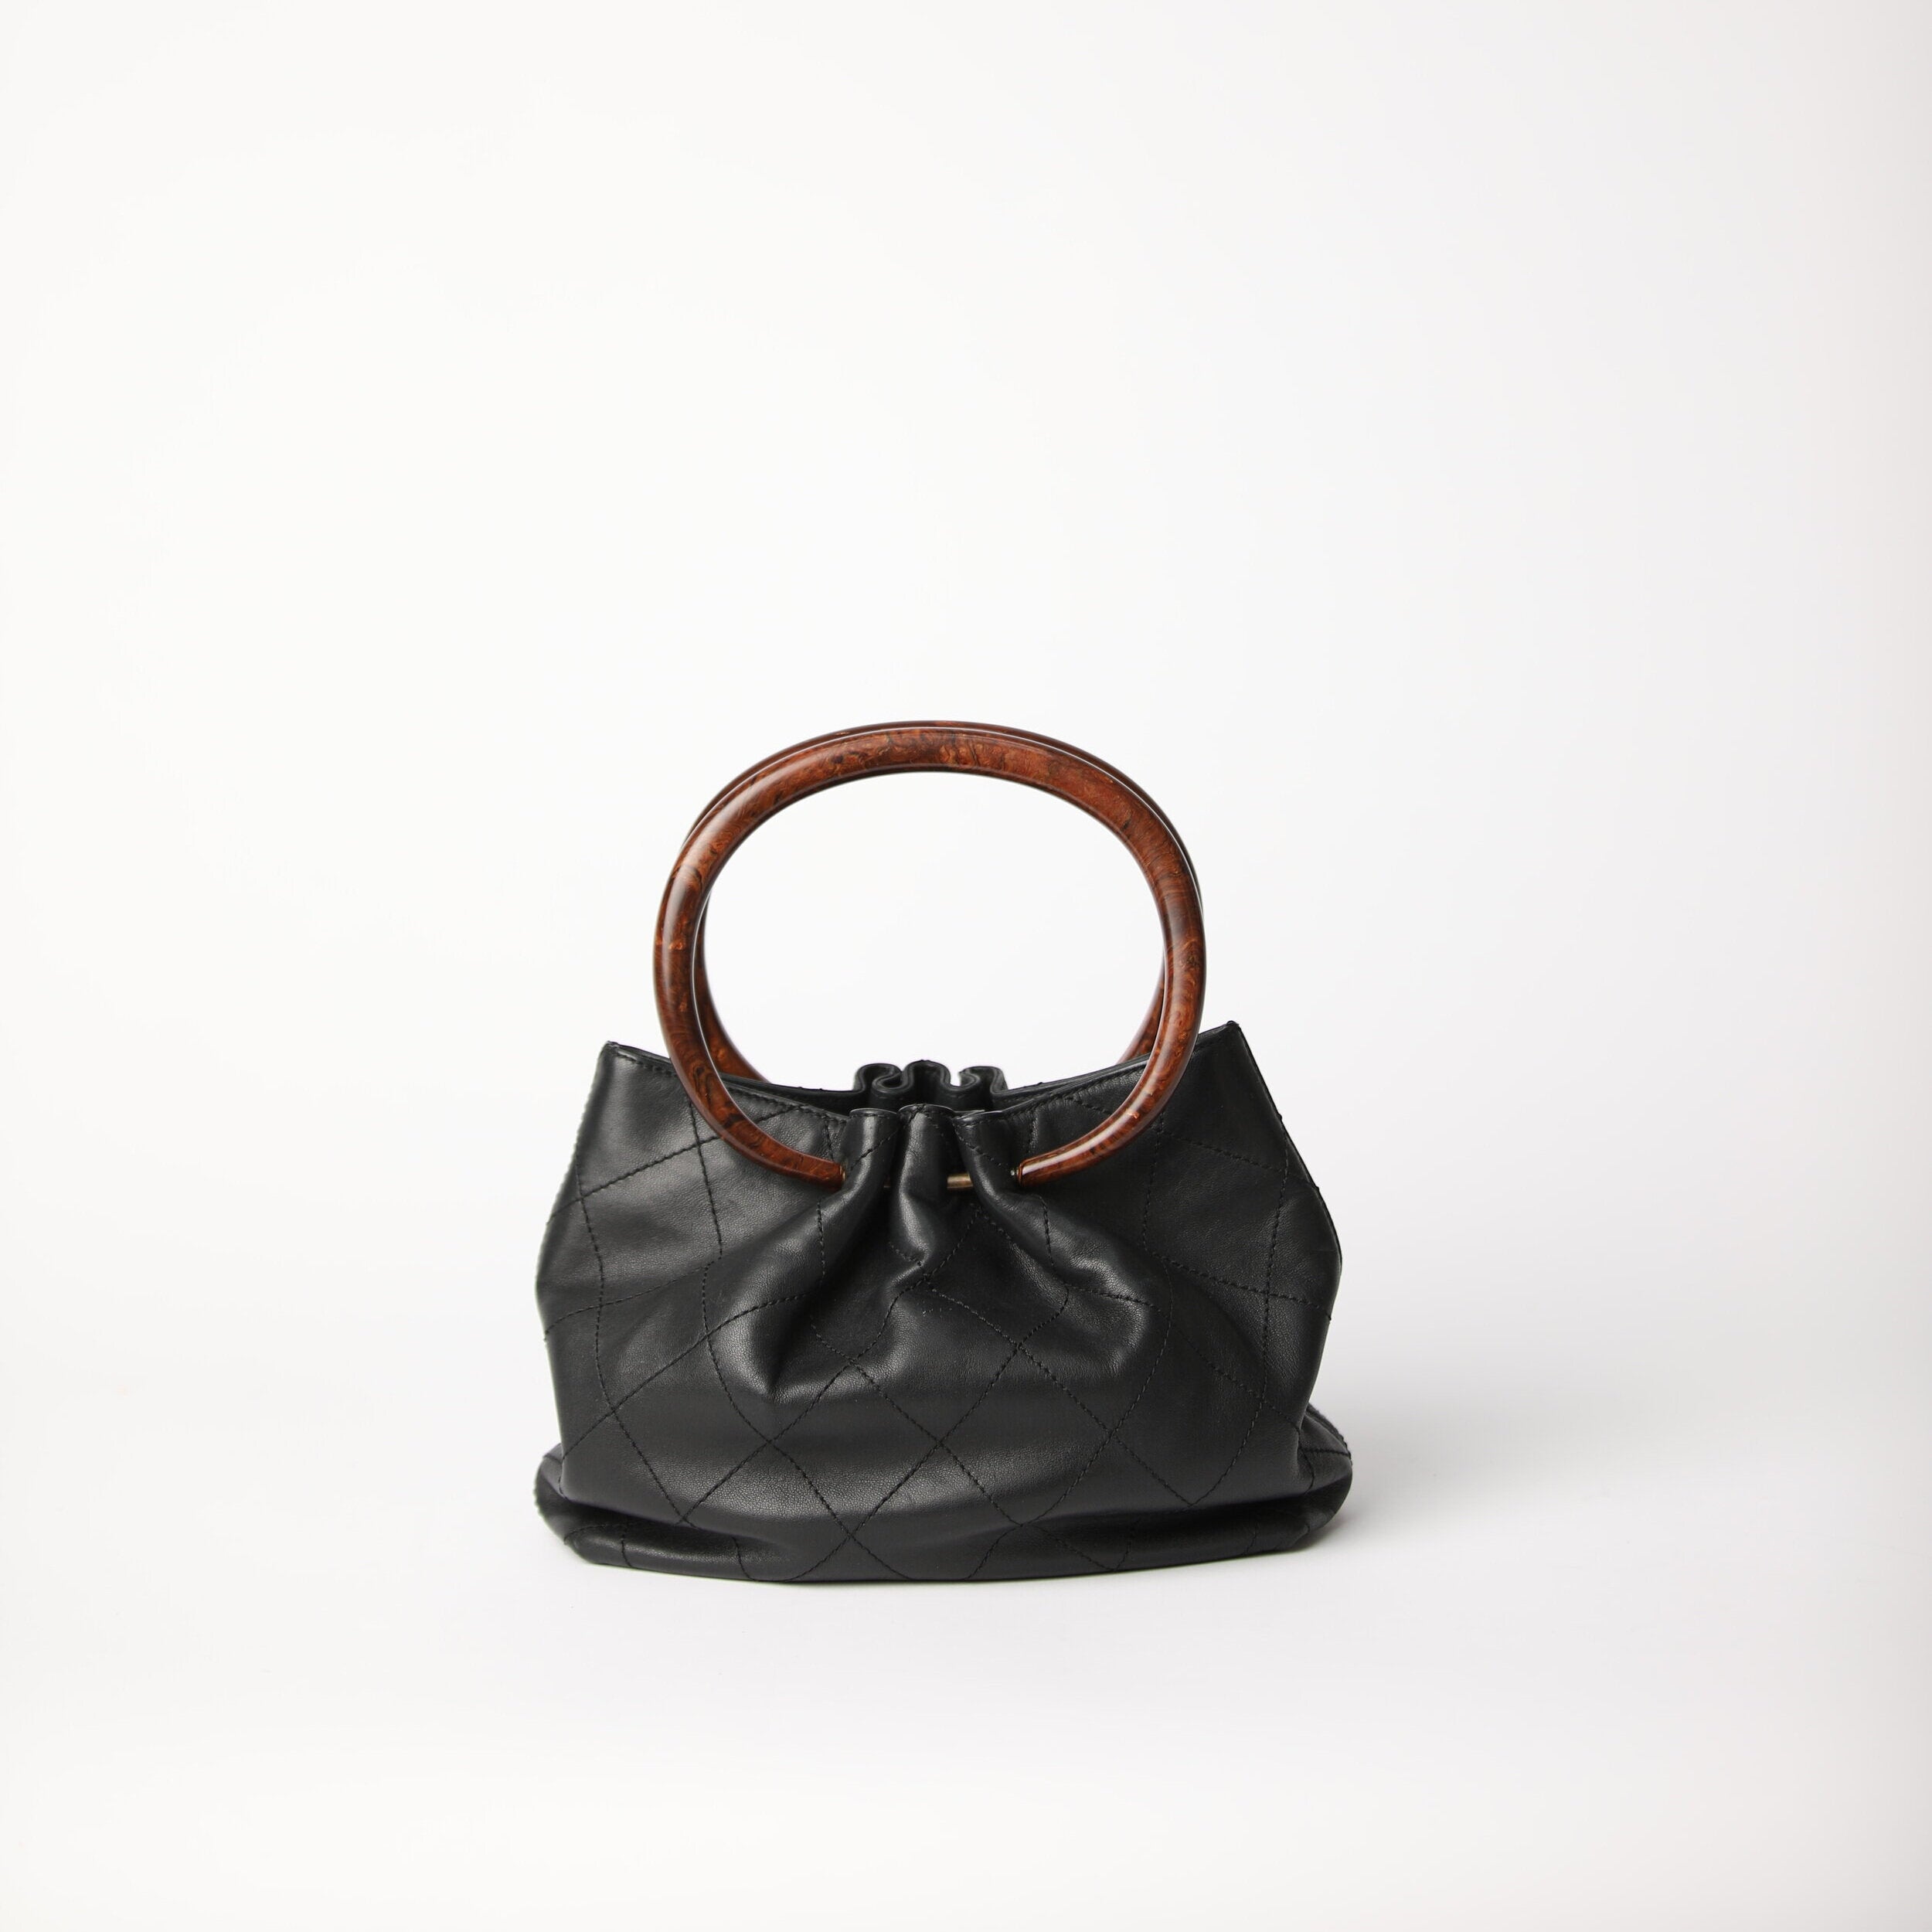 Chanel chanel chain handbag - Gem